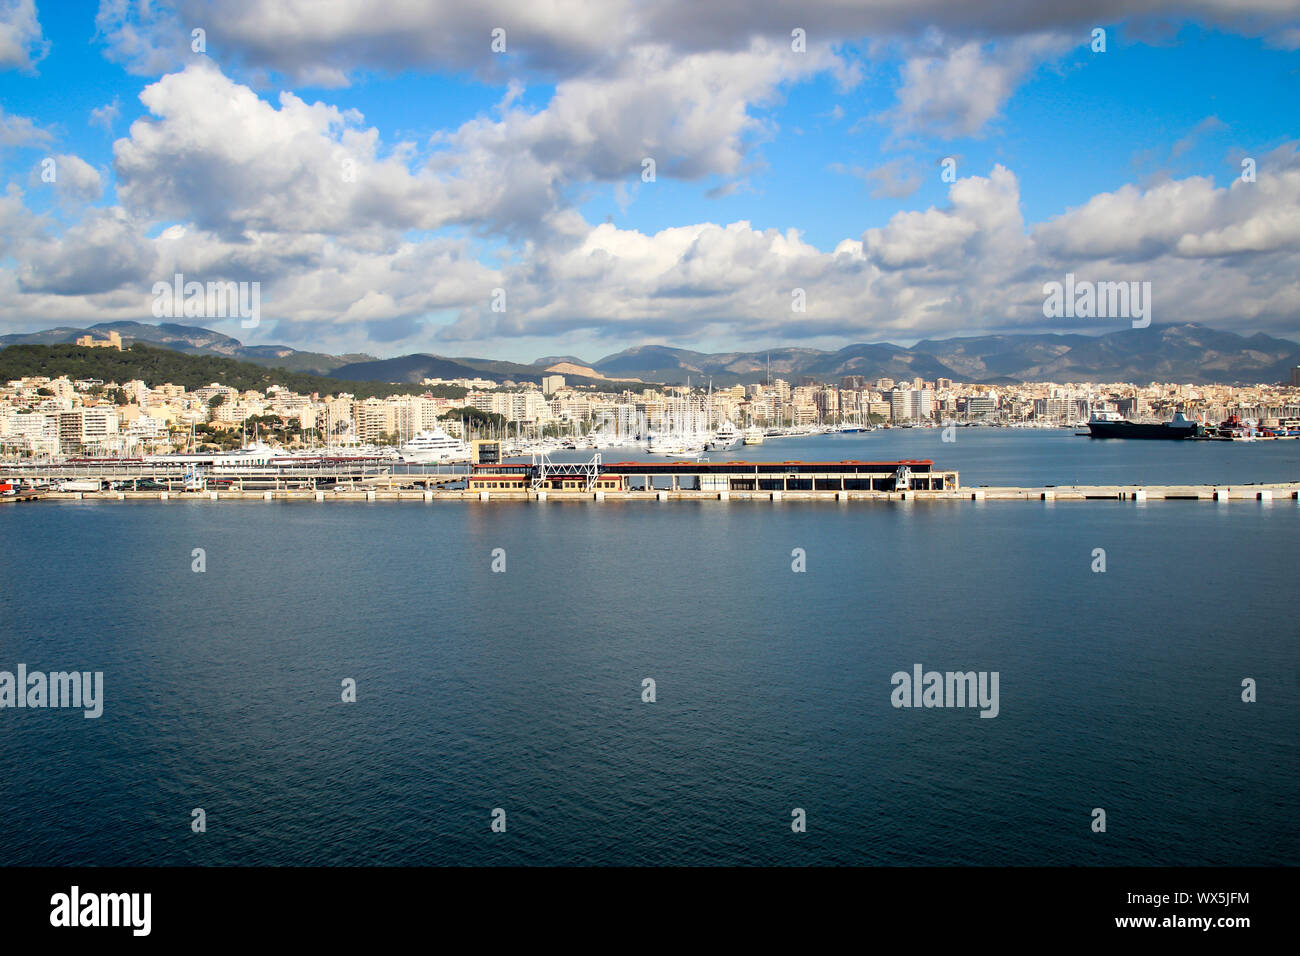 this are Harbor views of Palma de Mallorca Stock Photo